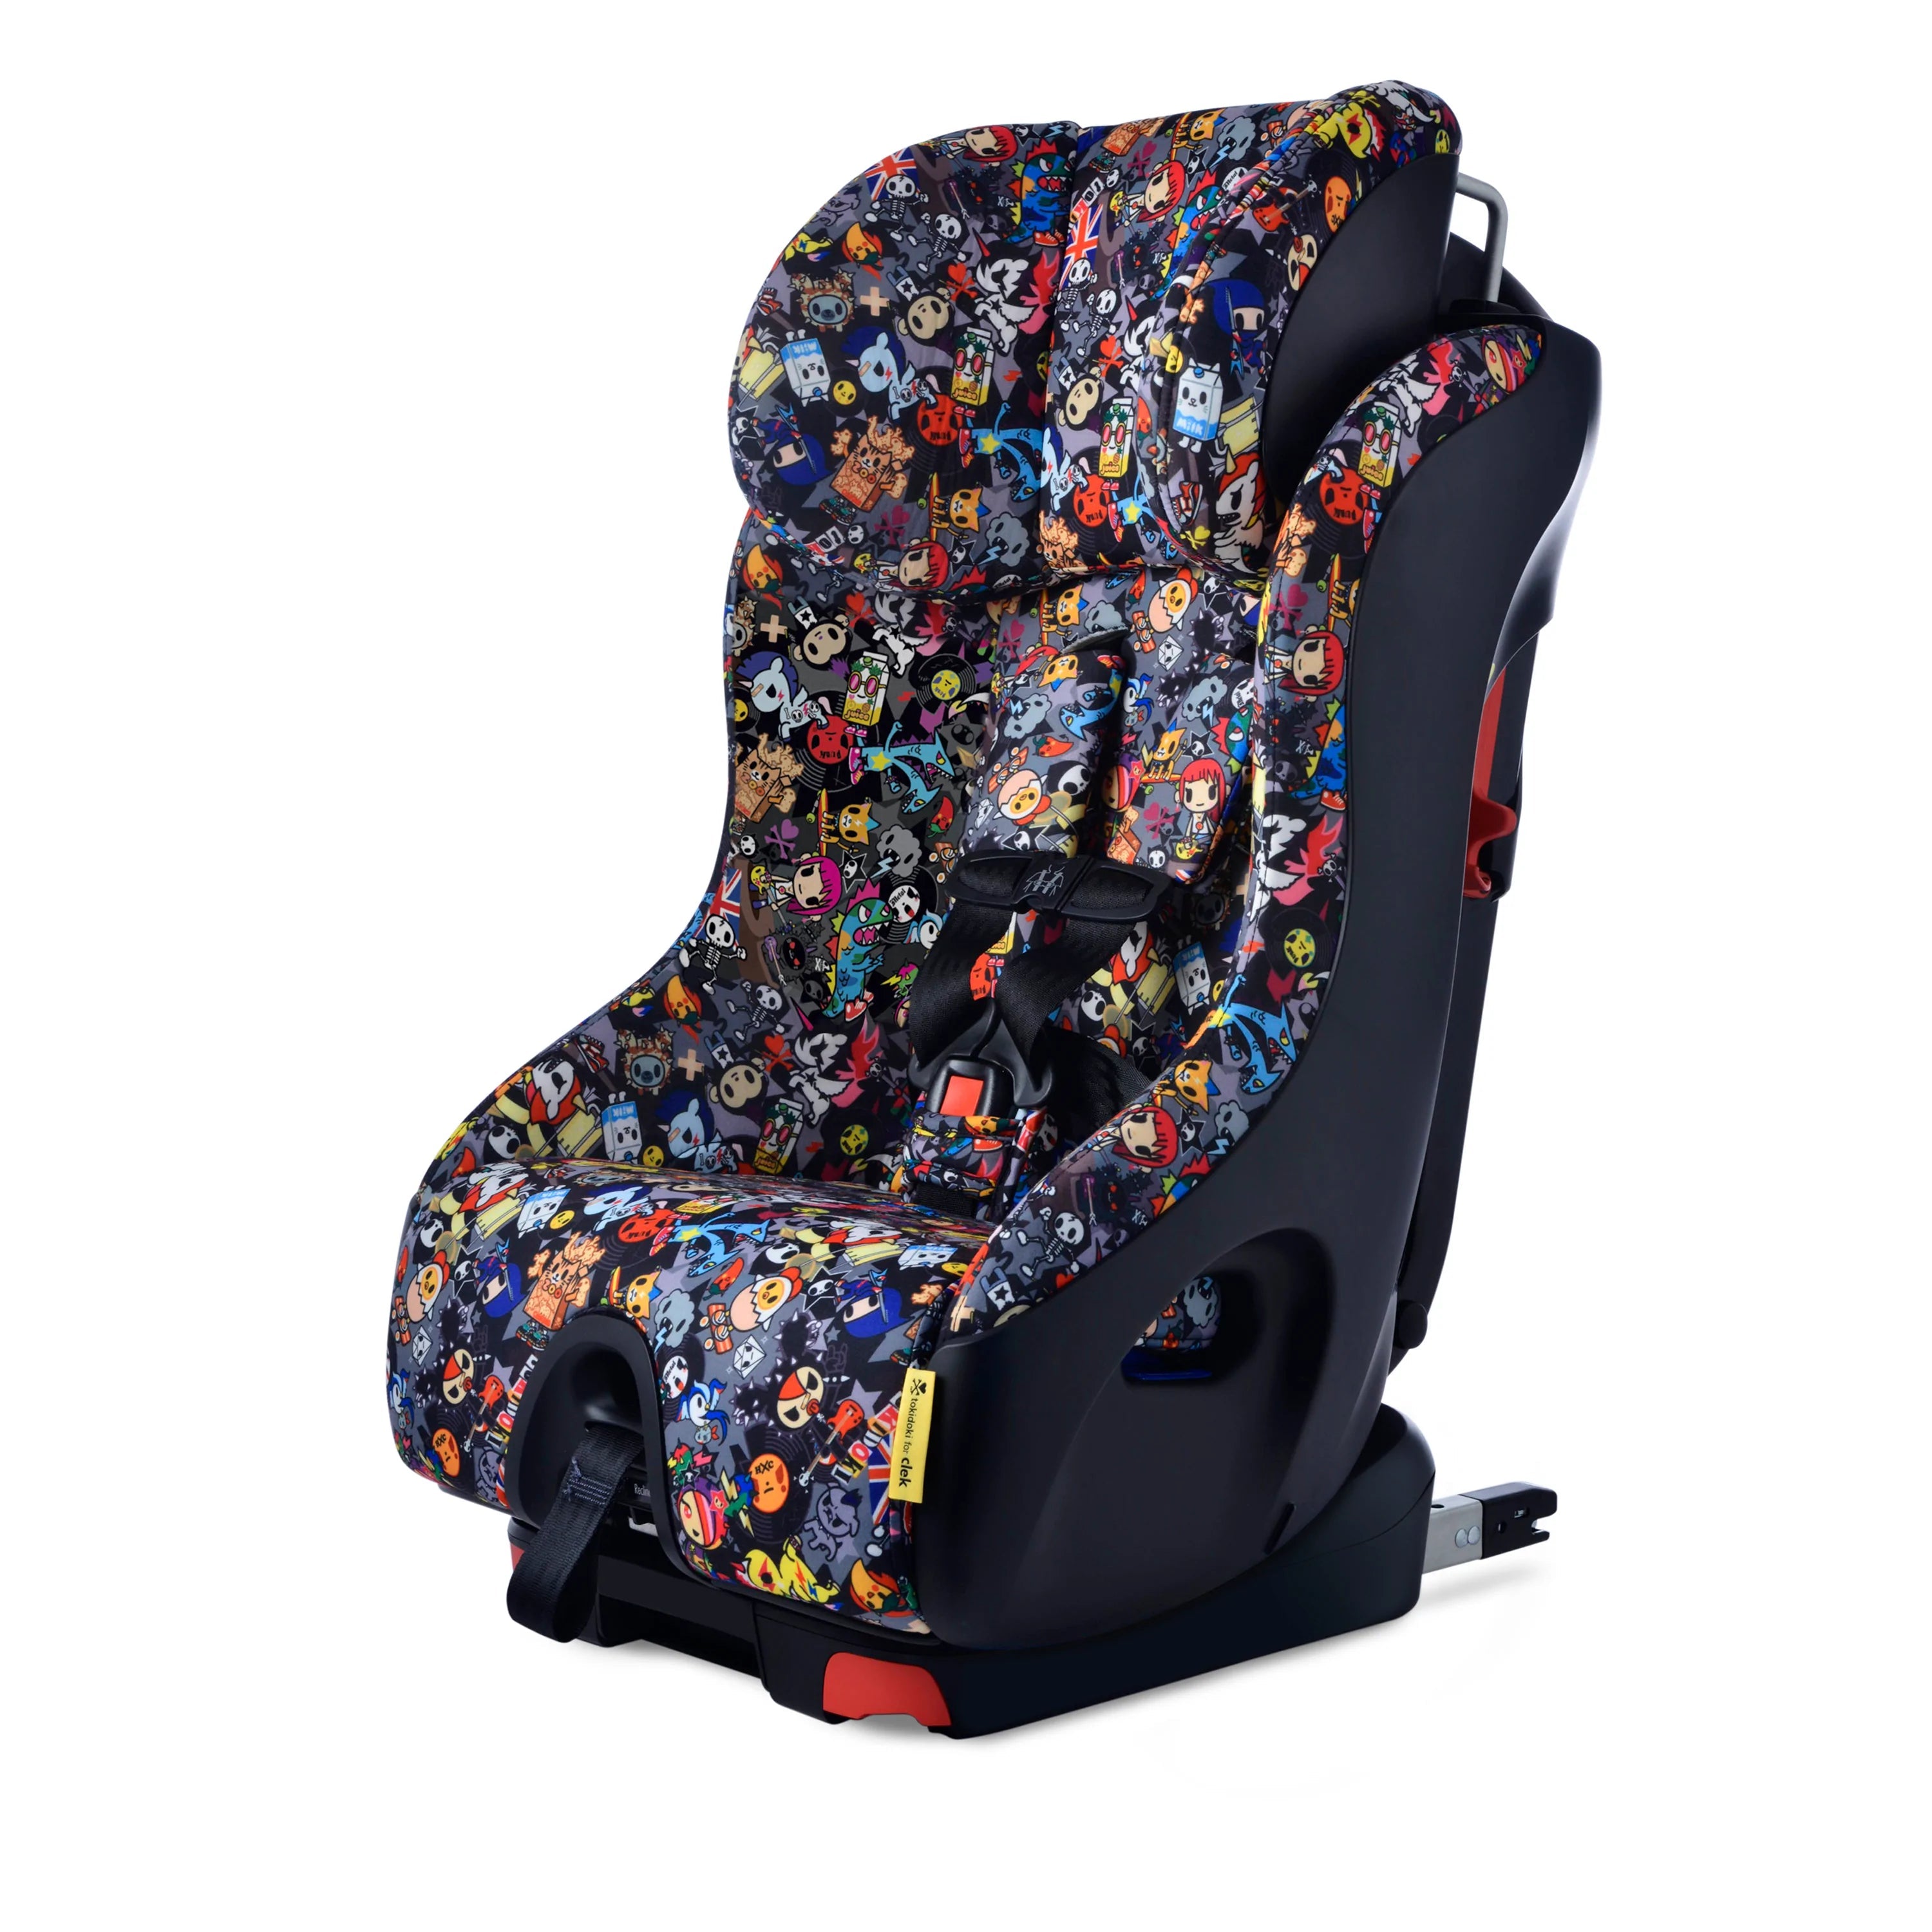 Foonf Convertible Car Seat - ANB Baby -$500 -$1000